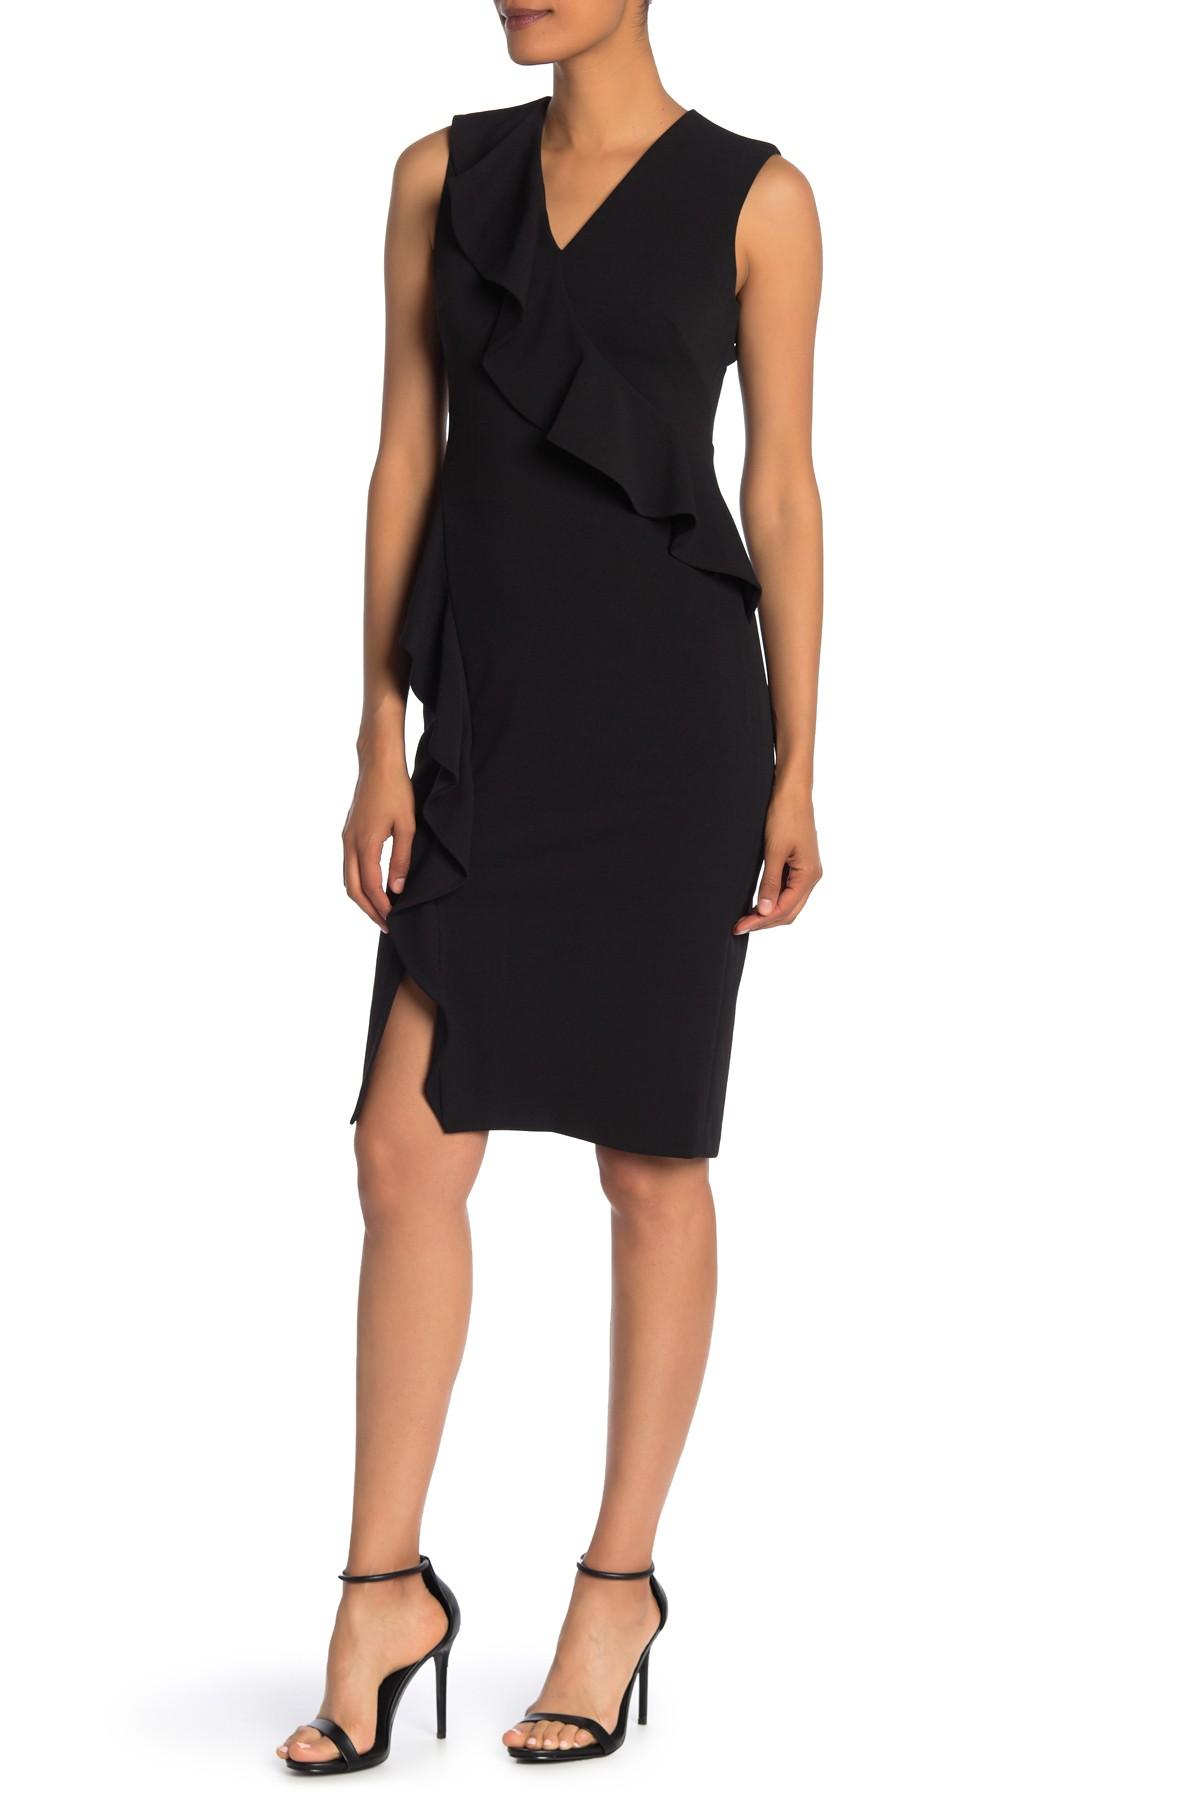 Calvin Klein Synthetic V-neck Ruffle Sheath Dress in Black - Lyst